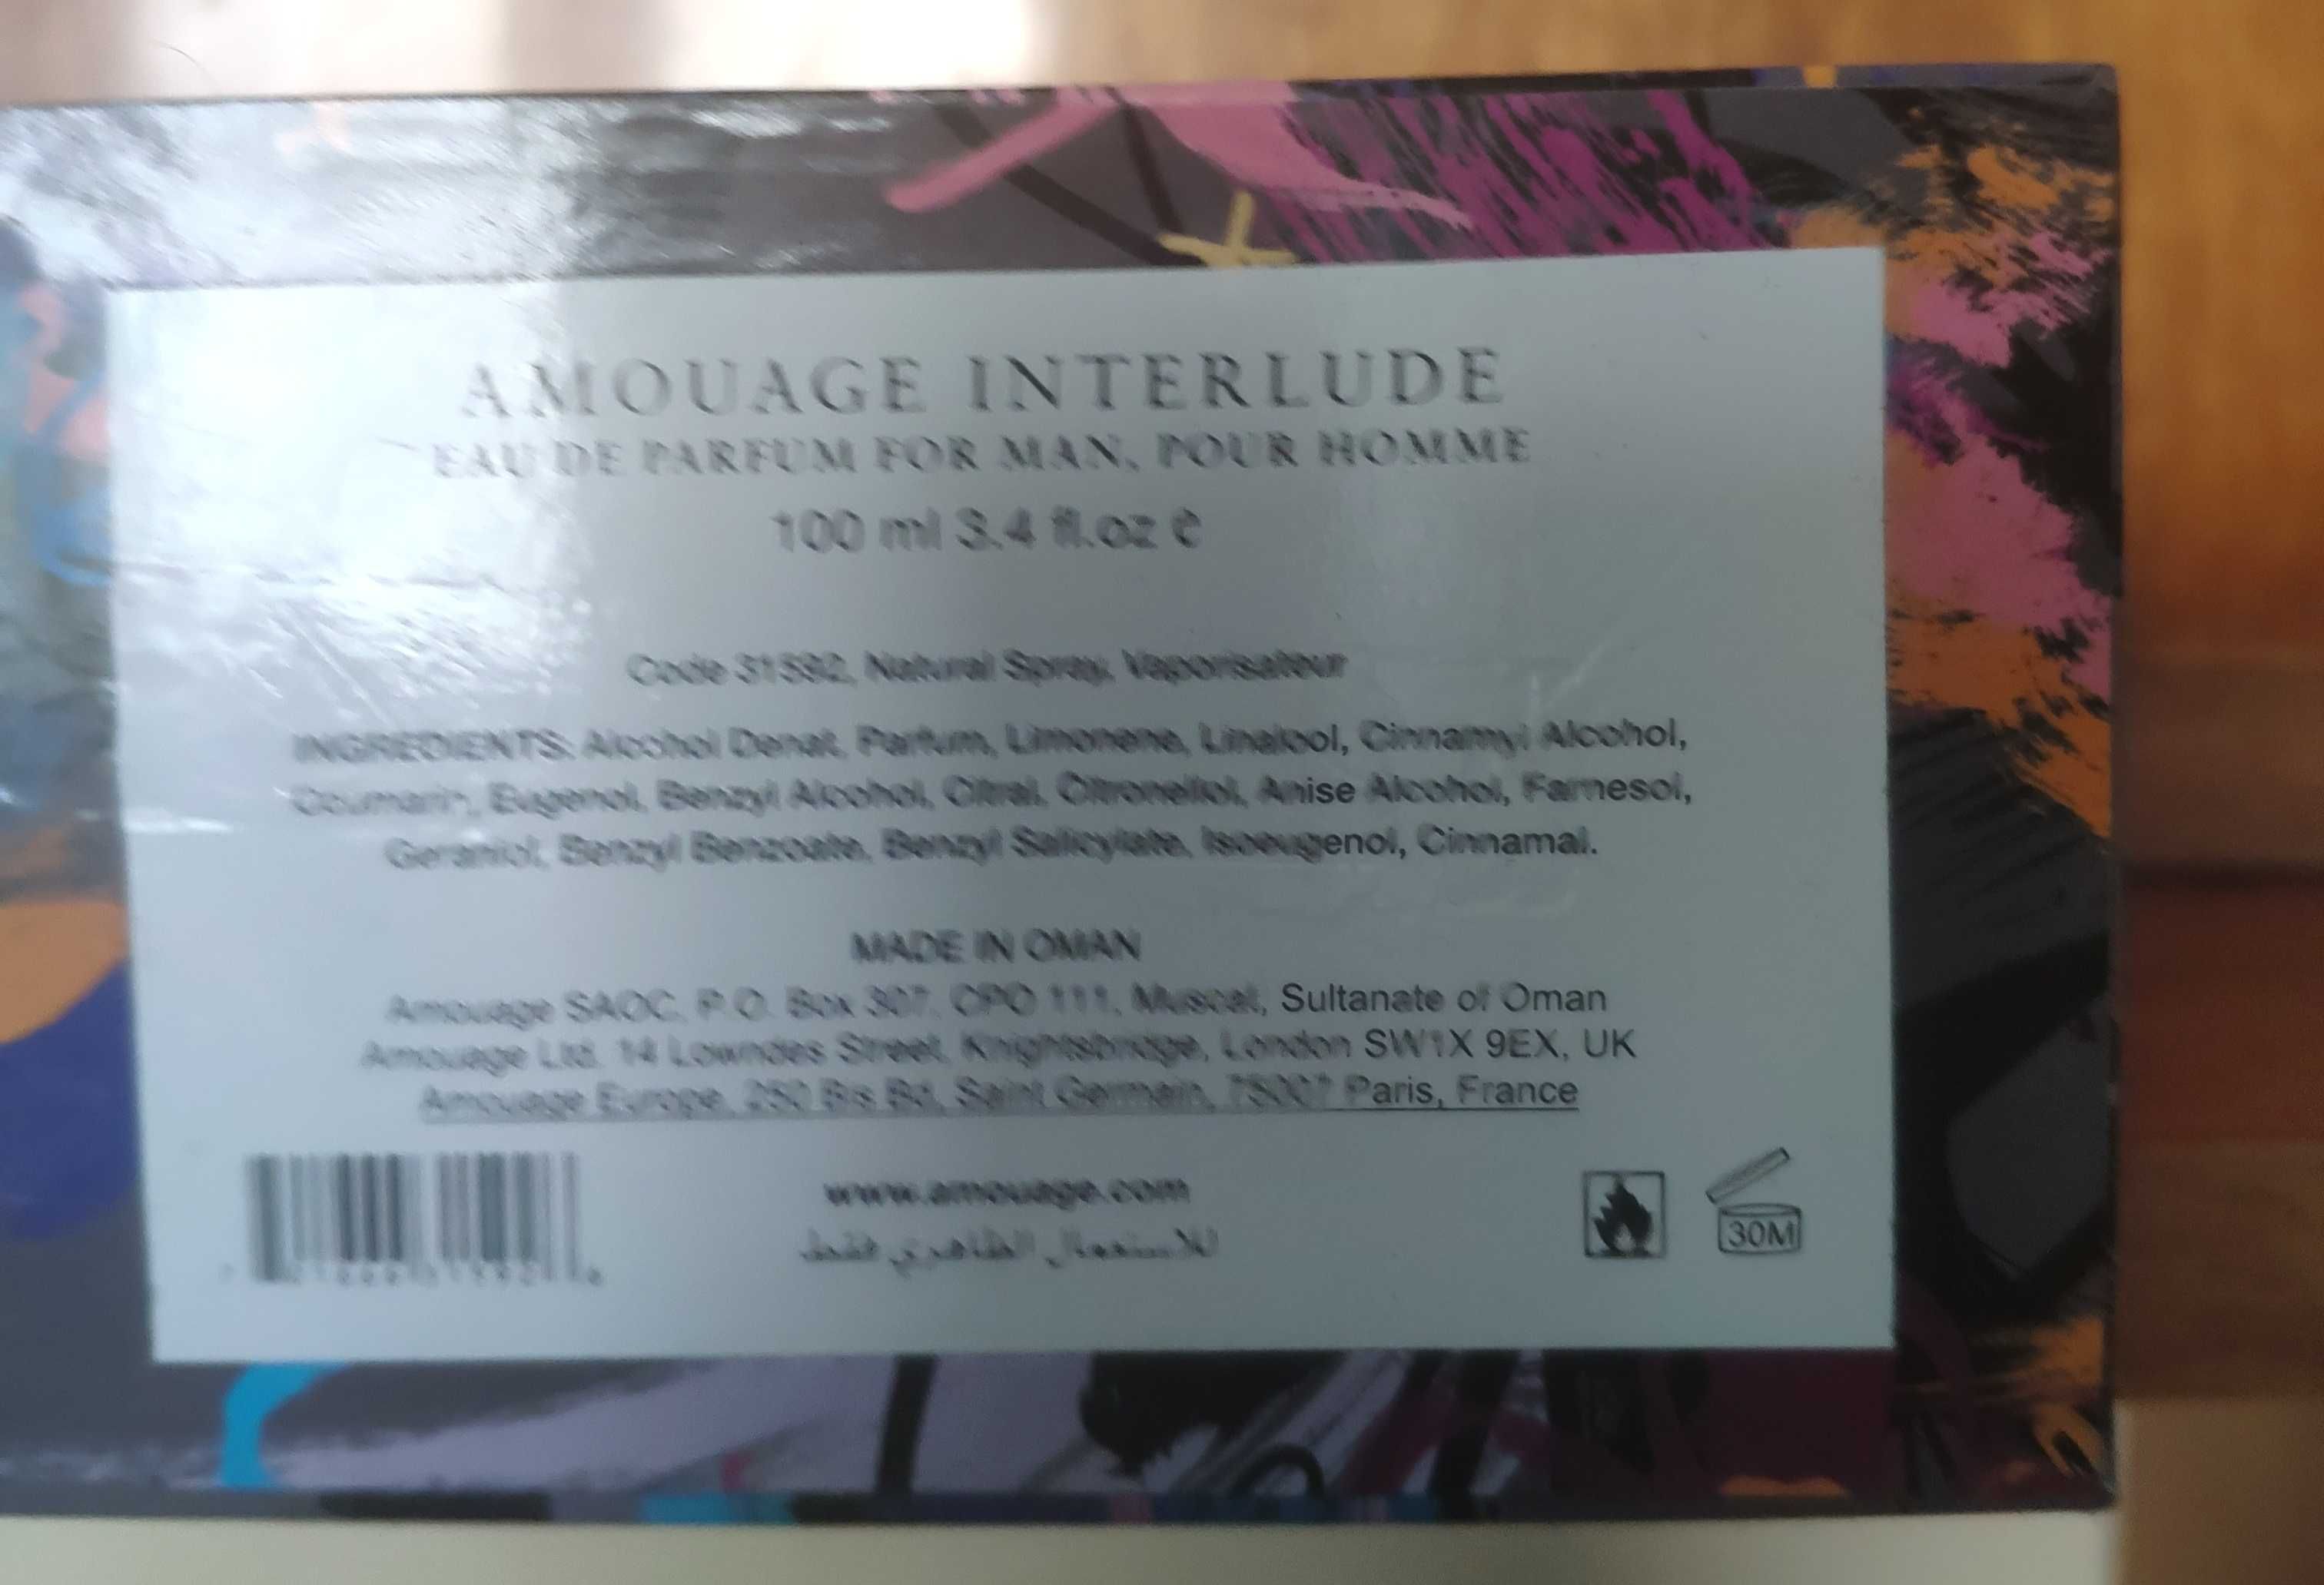 Amouage Interlude